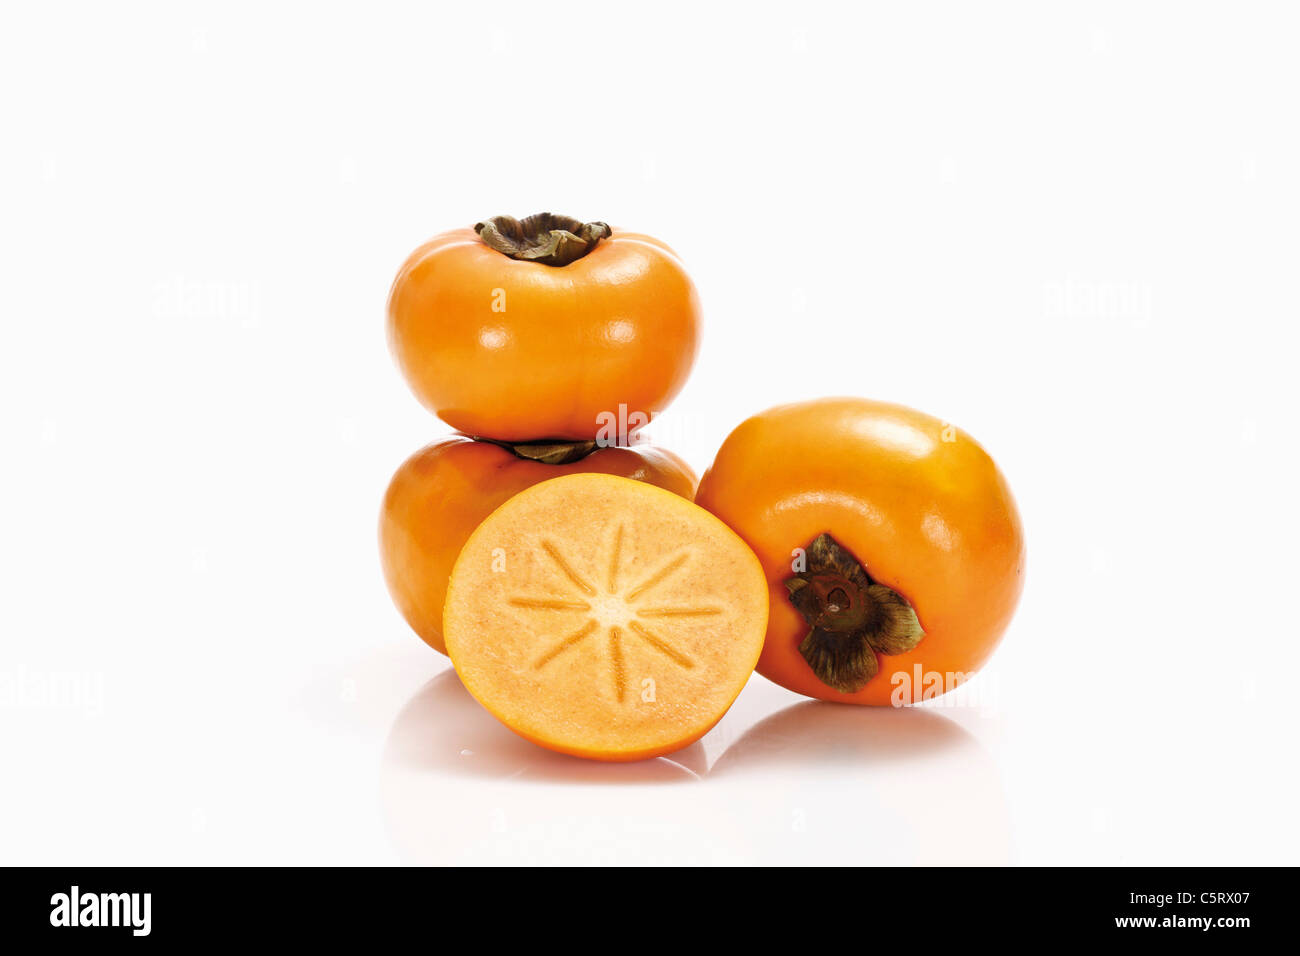 https://c8.alamy.com/comp/C5RX07/kaki-fruits-and-sliced-kaki-fruit-C5RX07.jpg